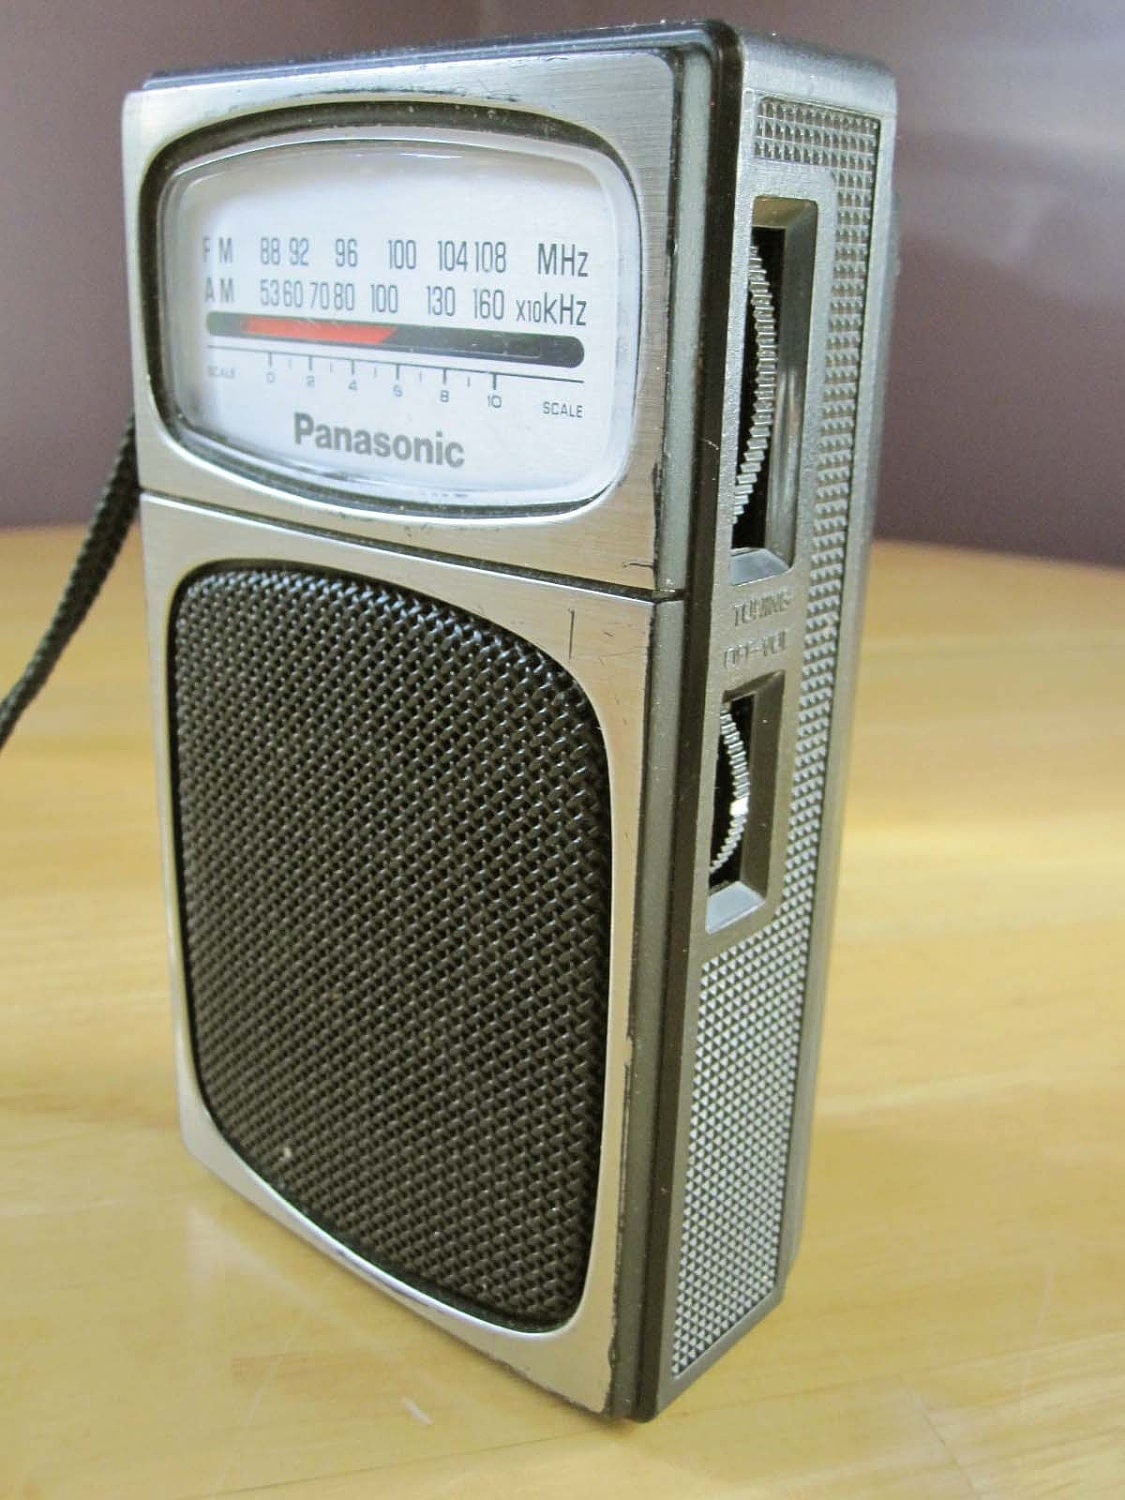 transistor radio 1970s